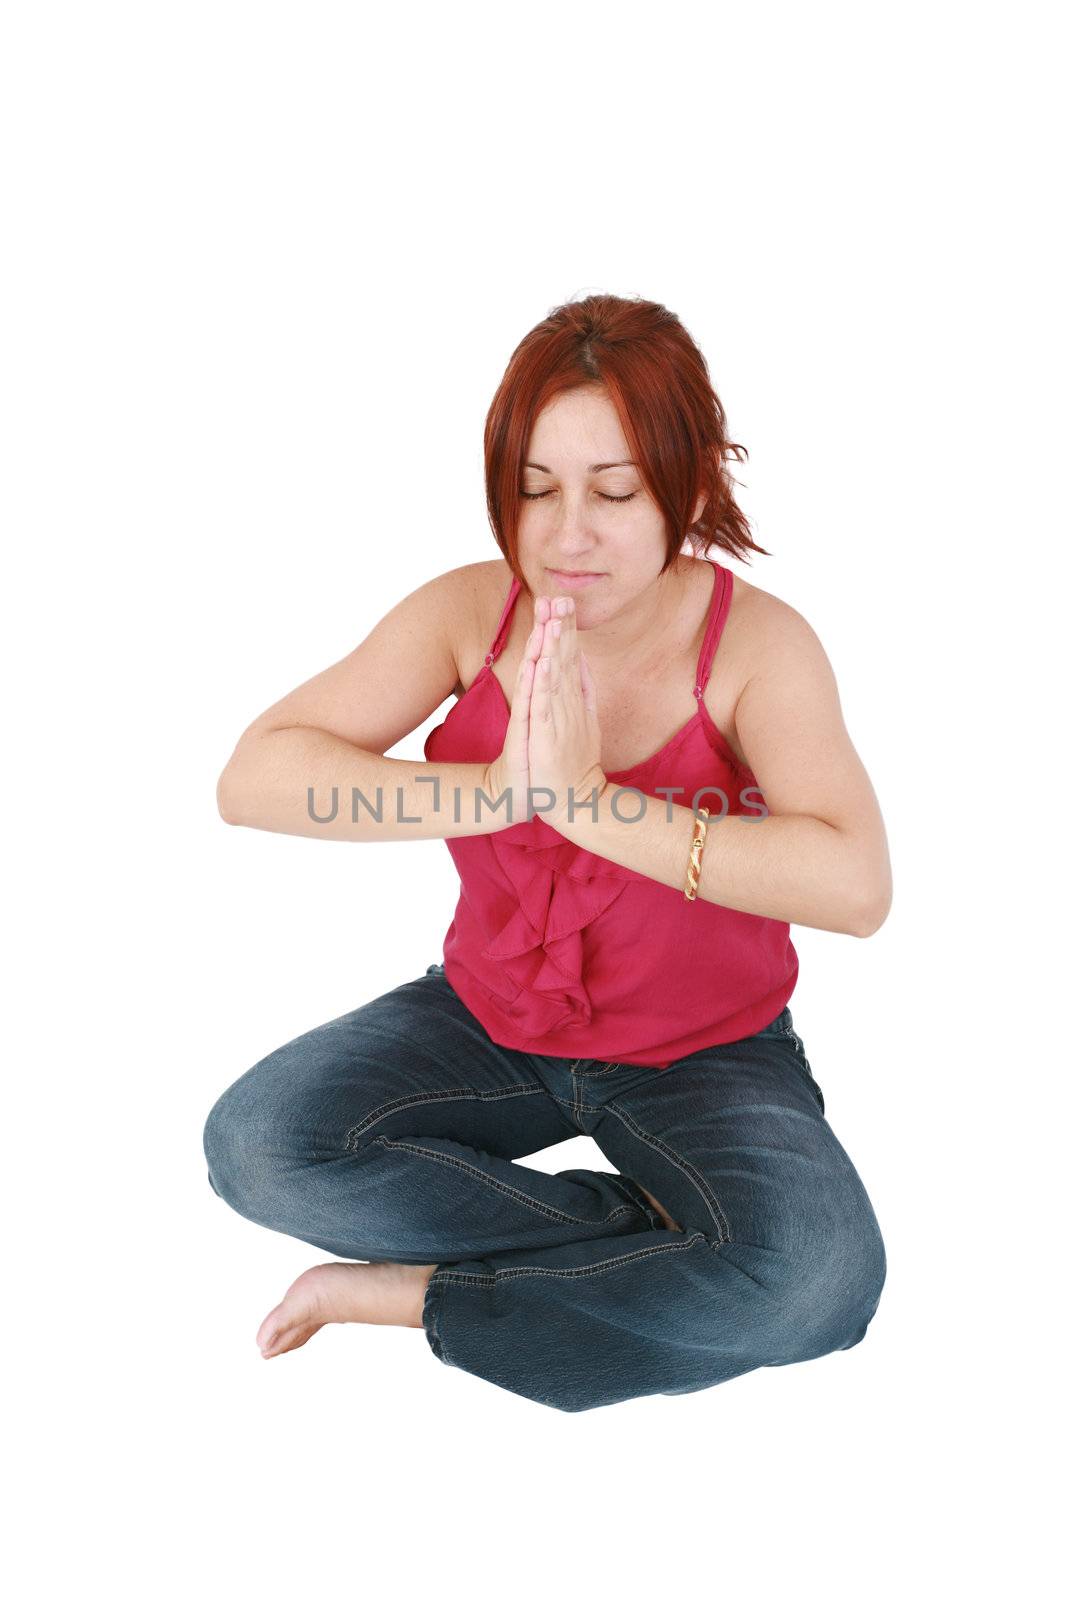 Calm woman doing relaxing yoga exercises